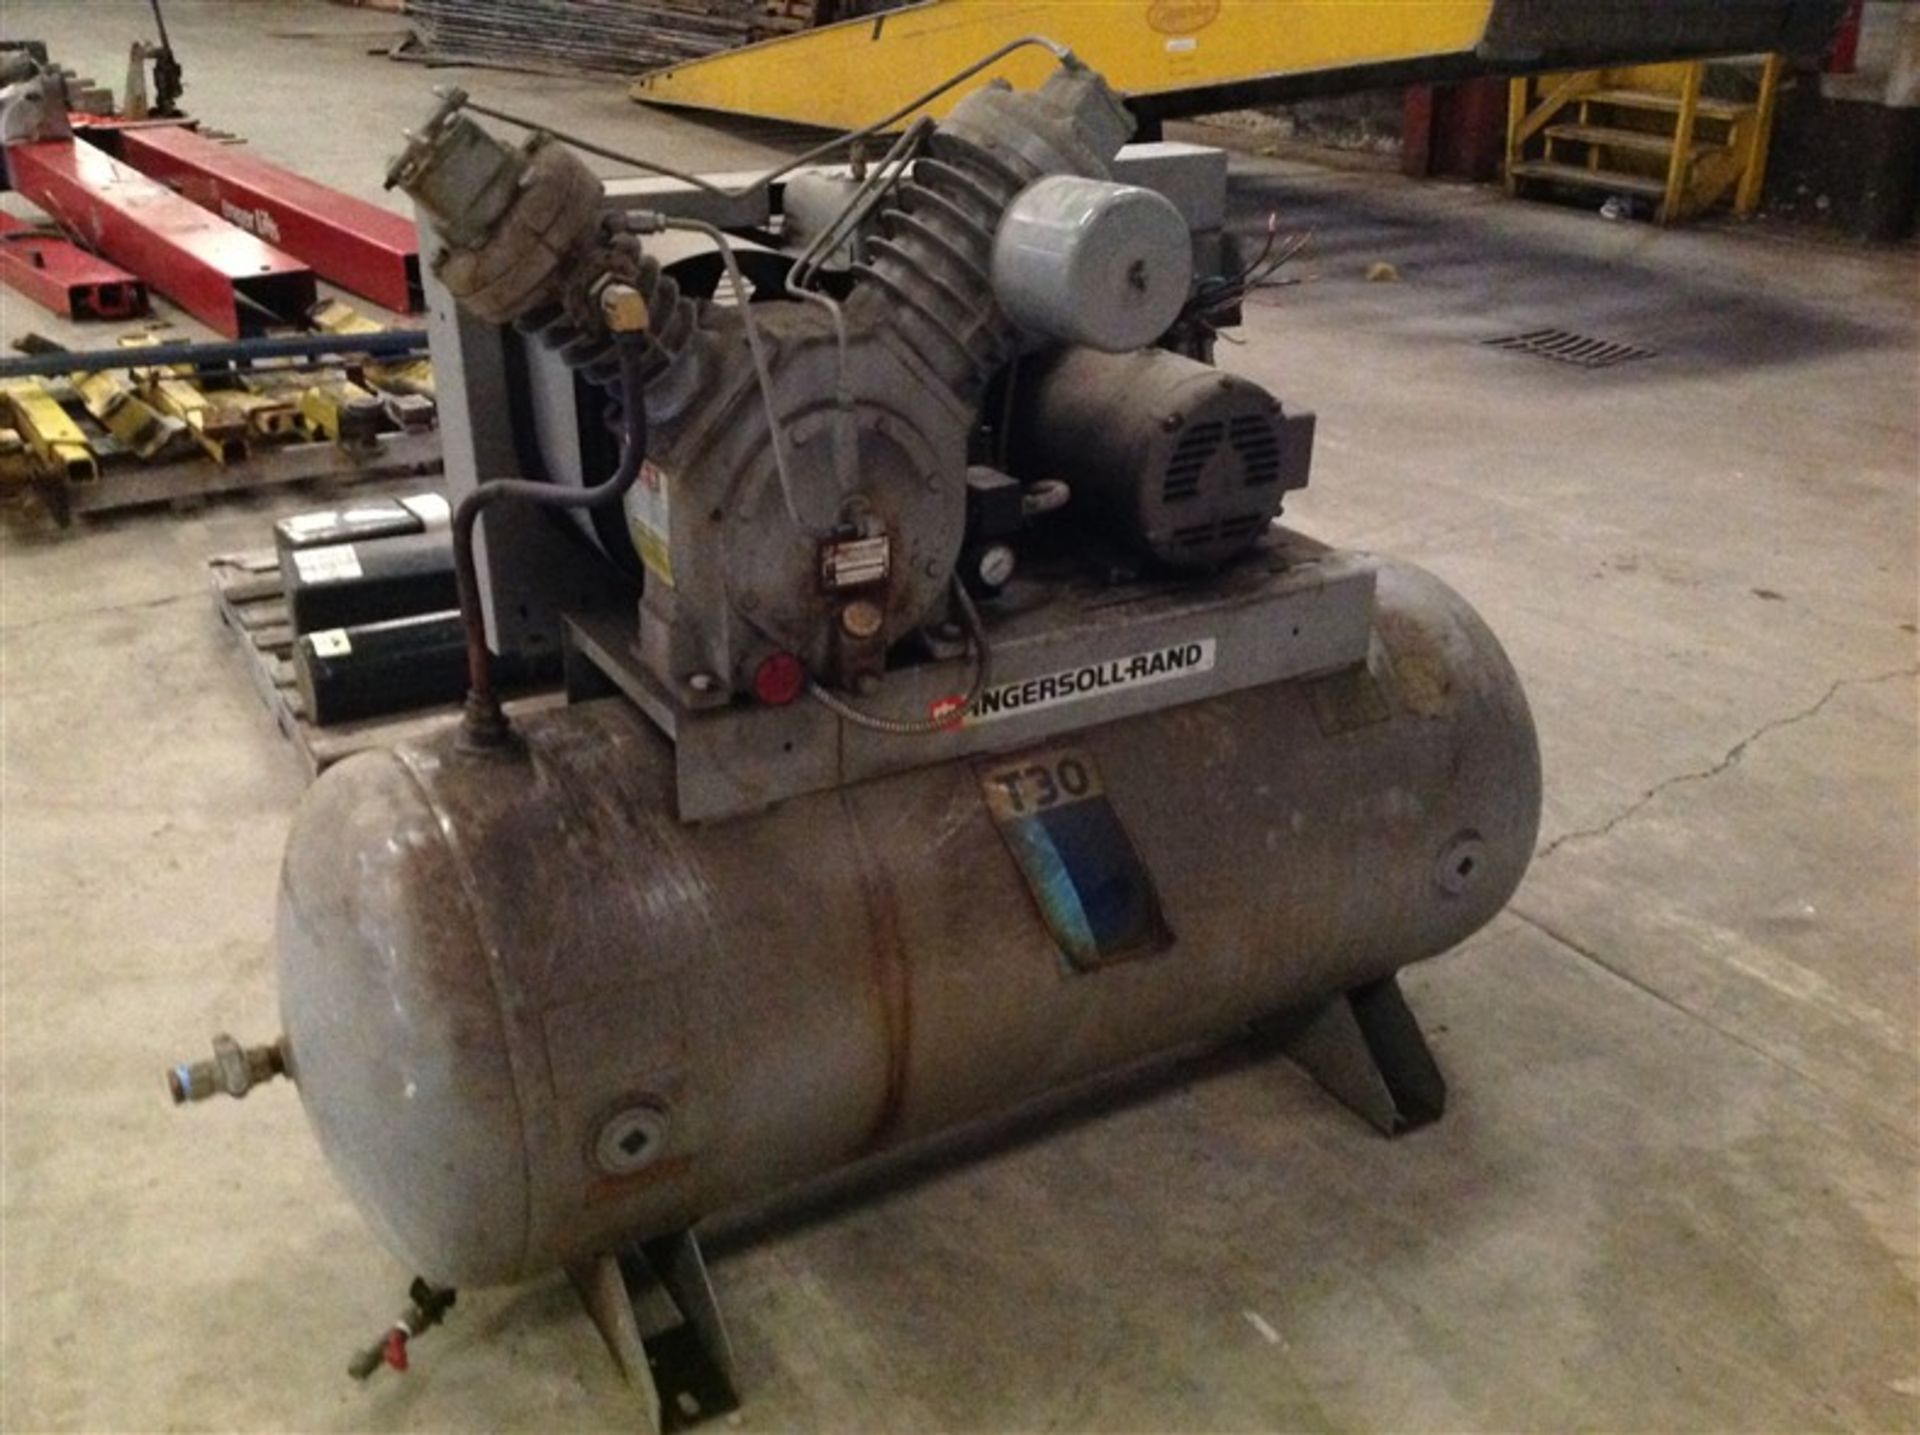 Ingersoll-Rand T30 (10HP) Air Compressor (71T2-10E) (1 x Your Bid)